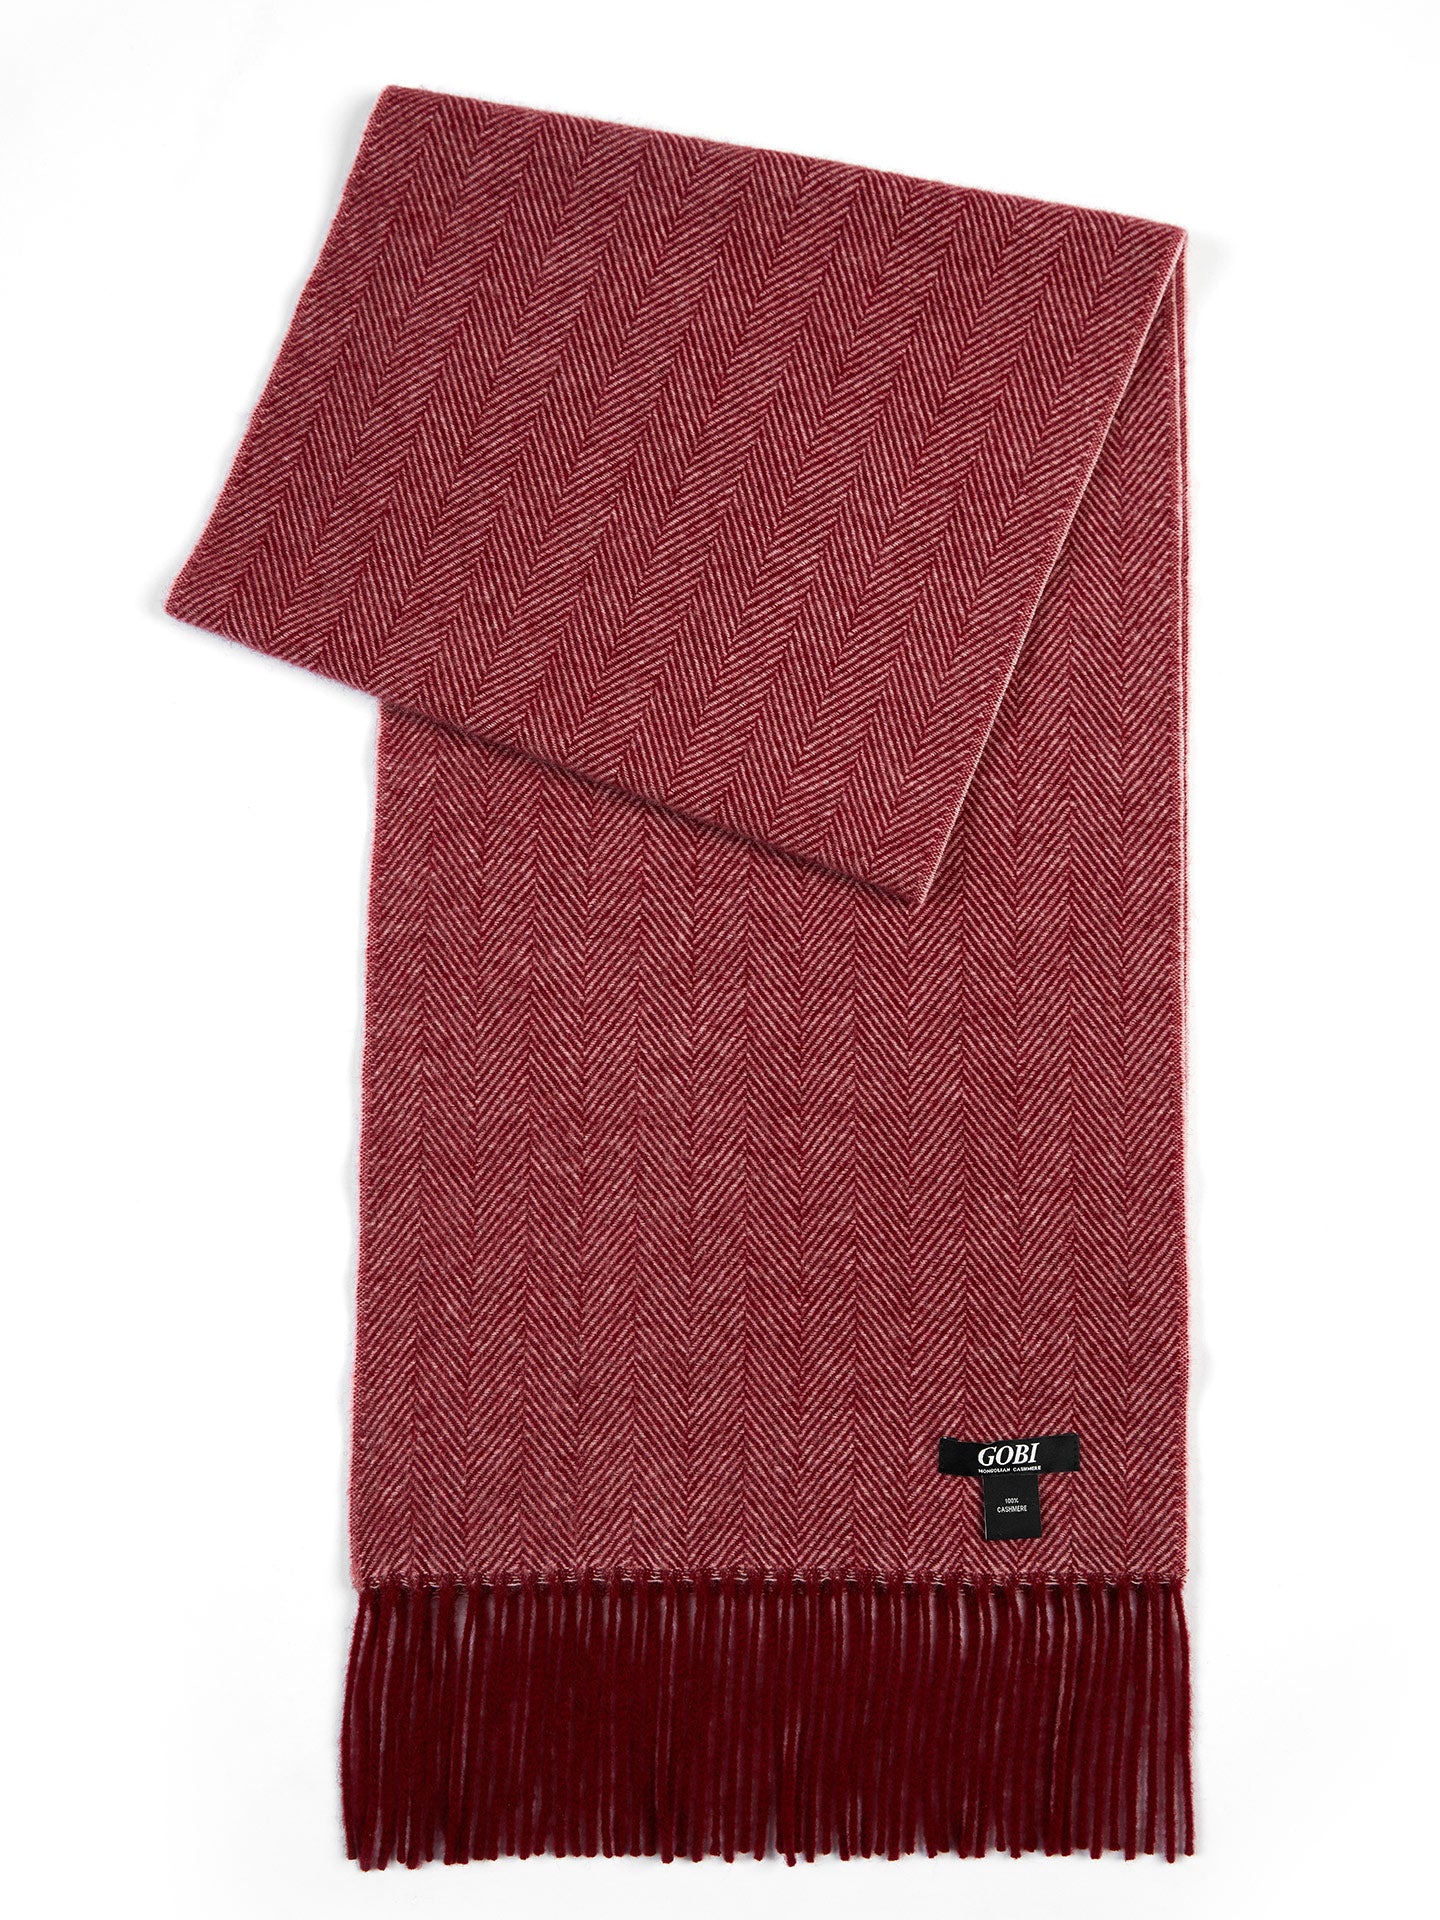 Unisex Cashmere Classic Check Scarf Tibetan Red - Gobi Cashmere